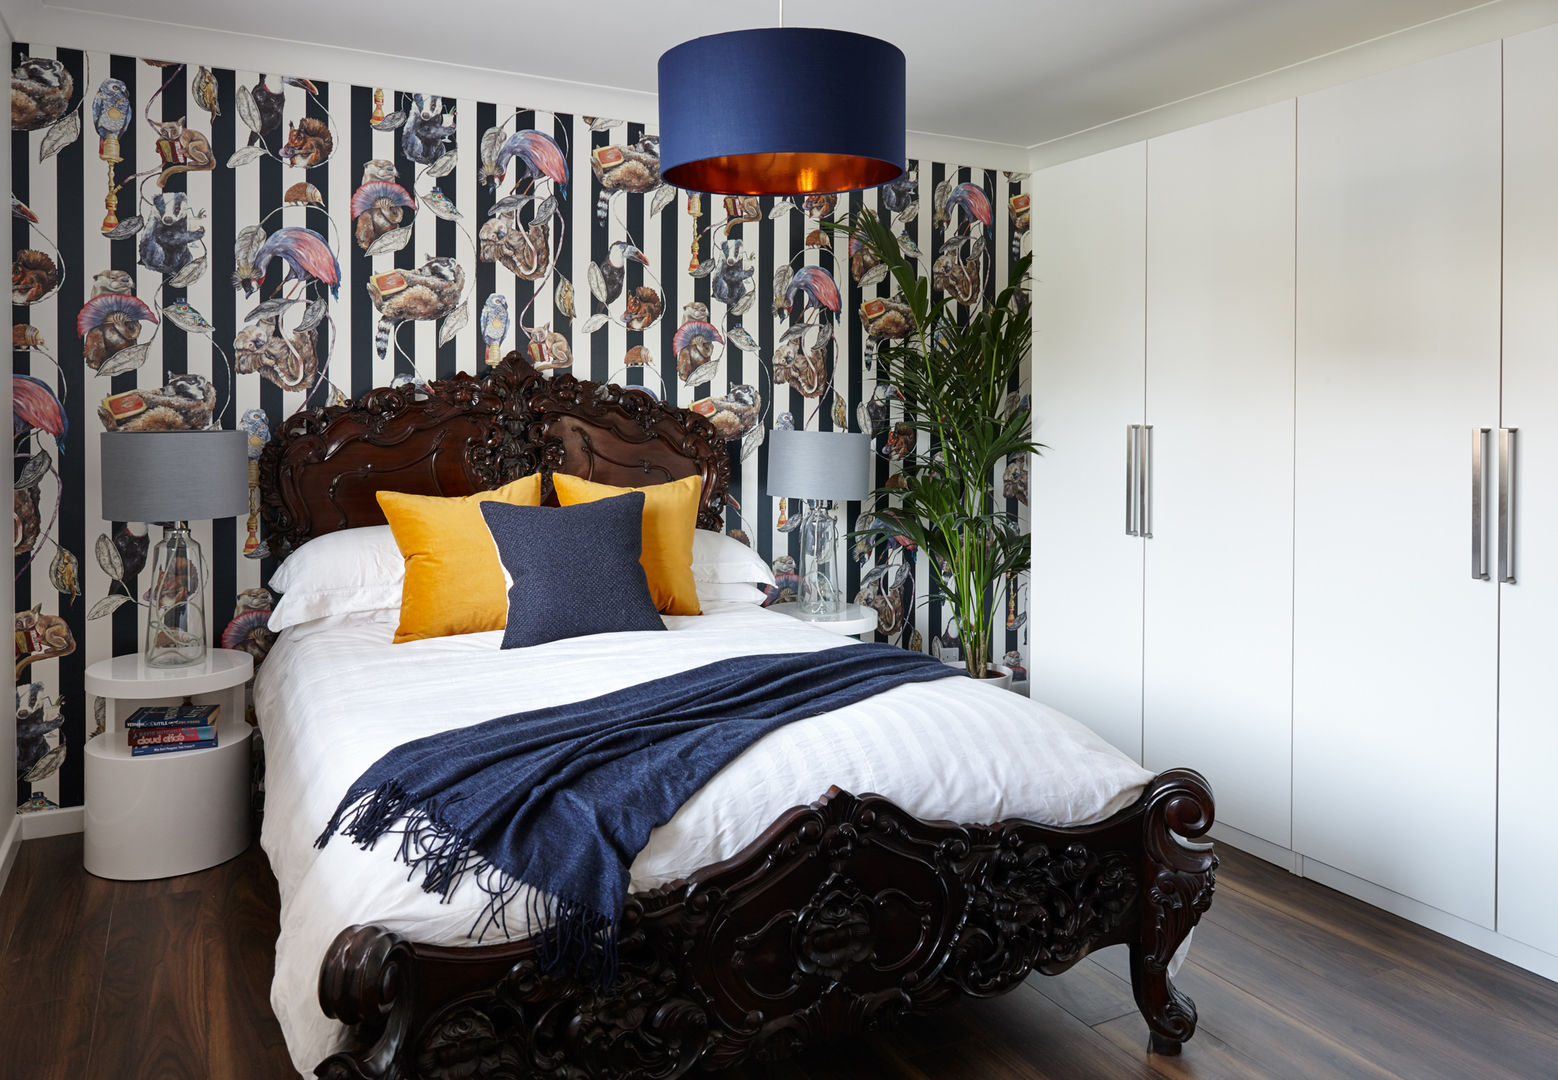 Virginia Water Apartment - Surrey Bhavin Taylor Design Quartos modernos bedroom,bed,rococo style,wallpaper,anaimals,blue,yellow,wardrobes,storage,plant,bedding